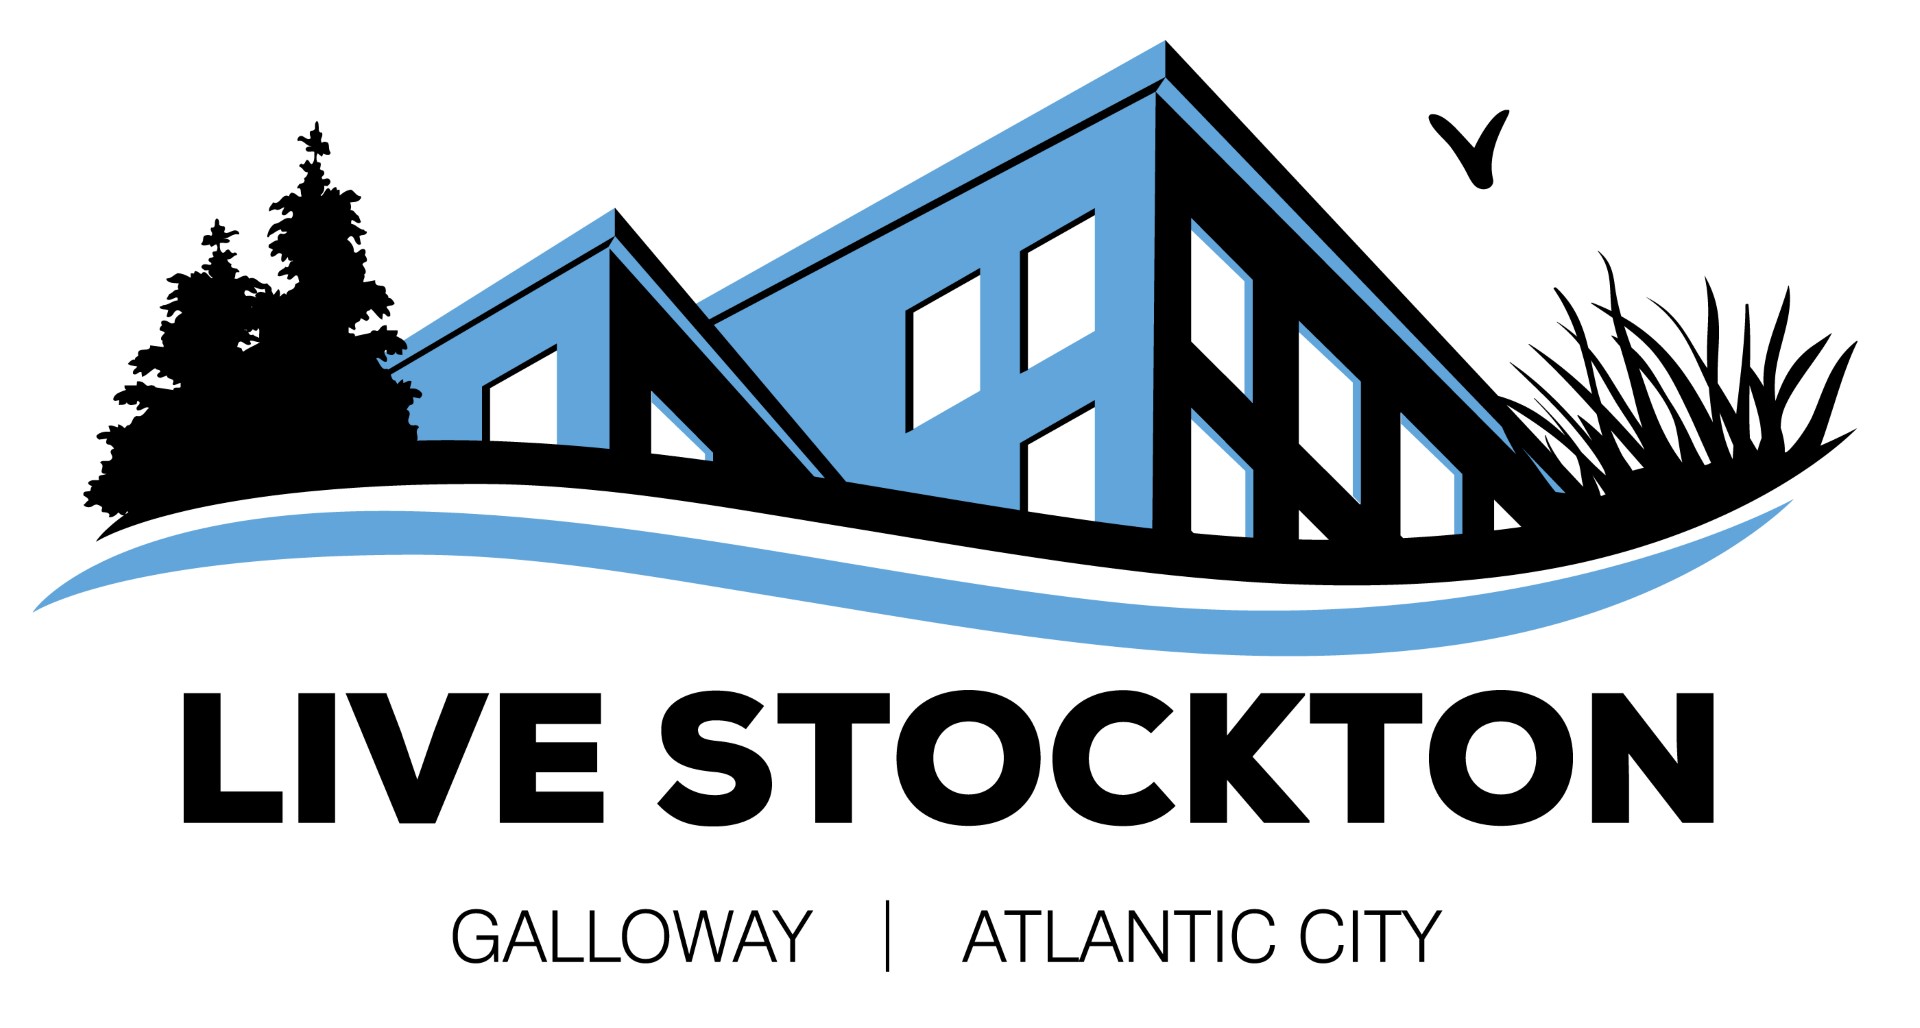 Live Stockton